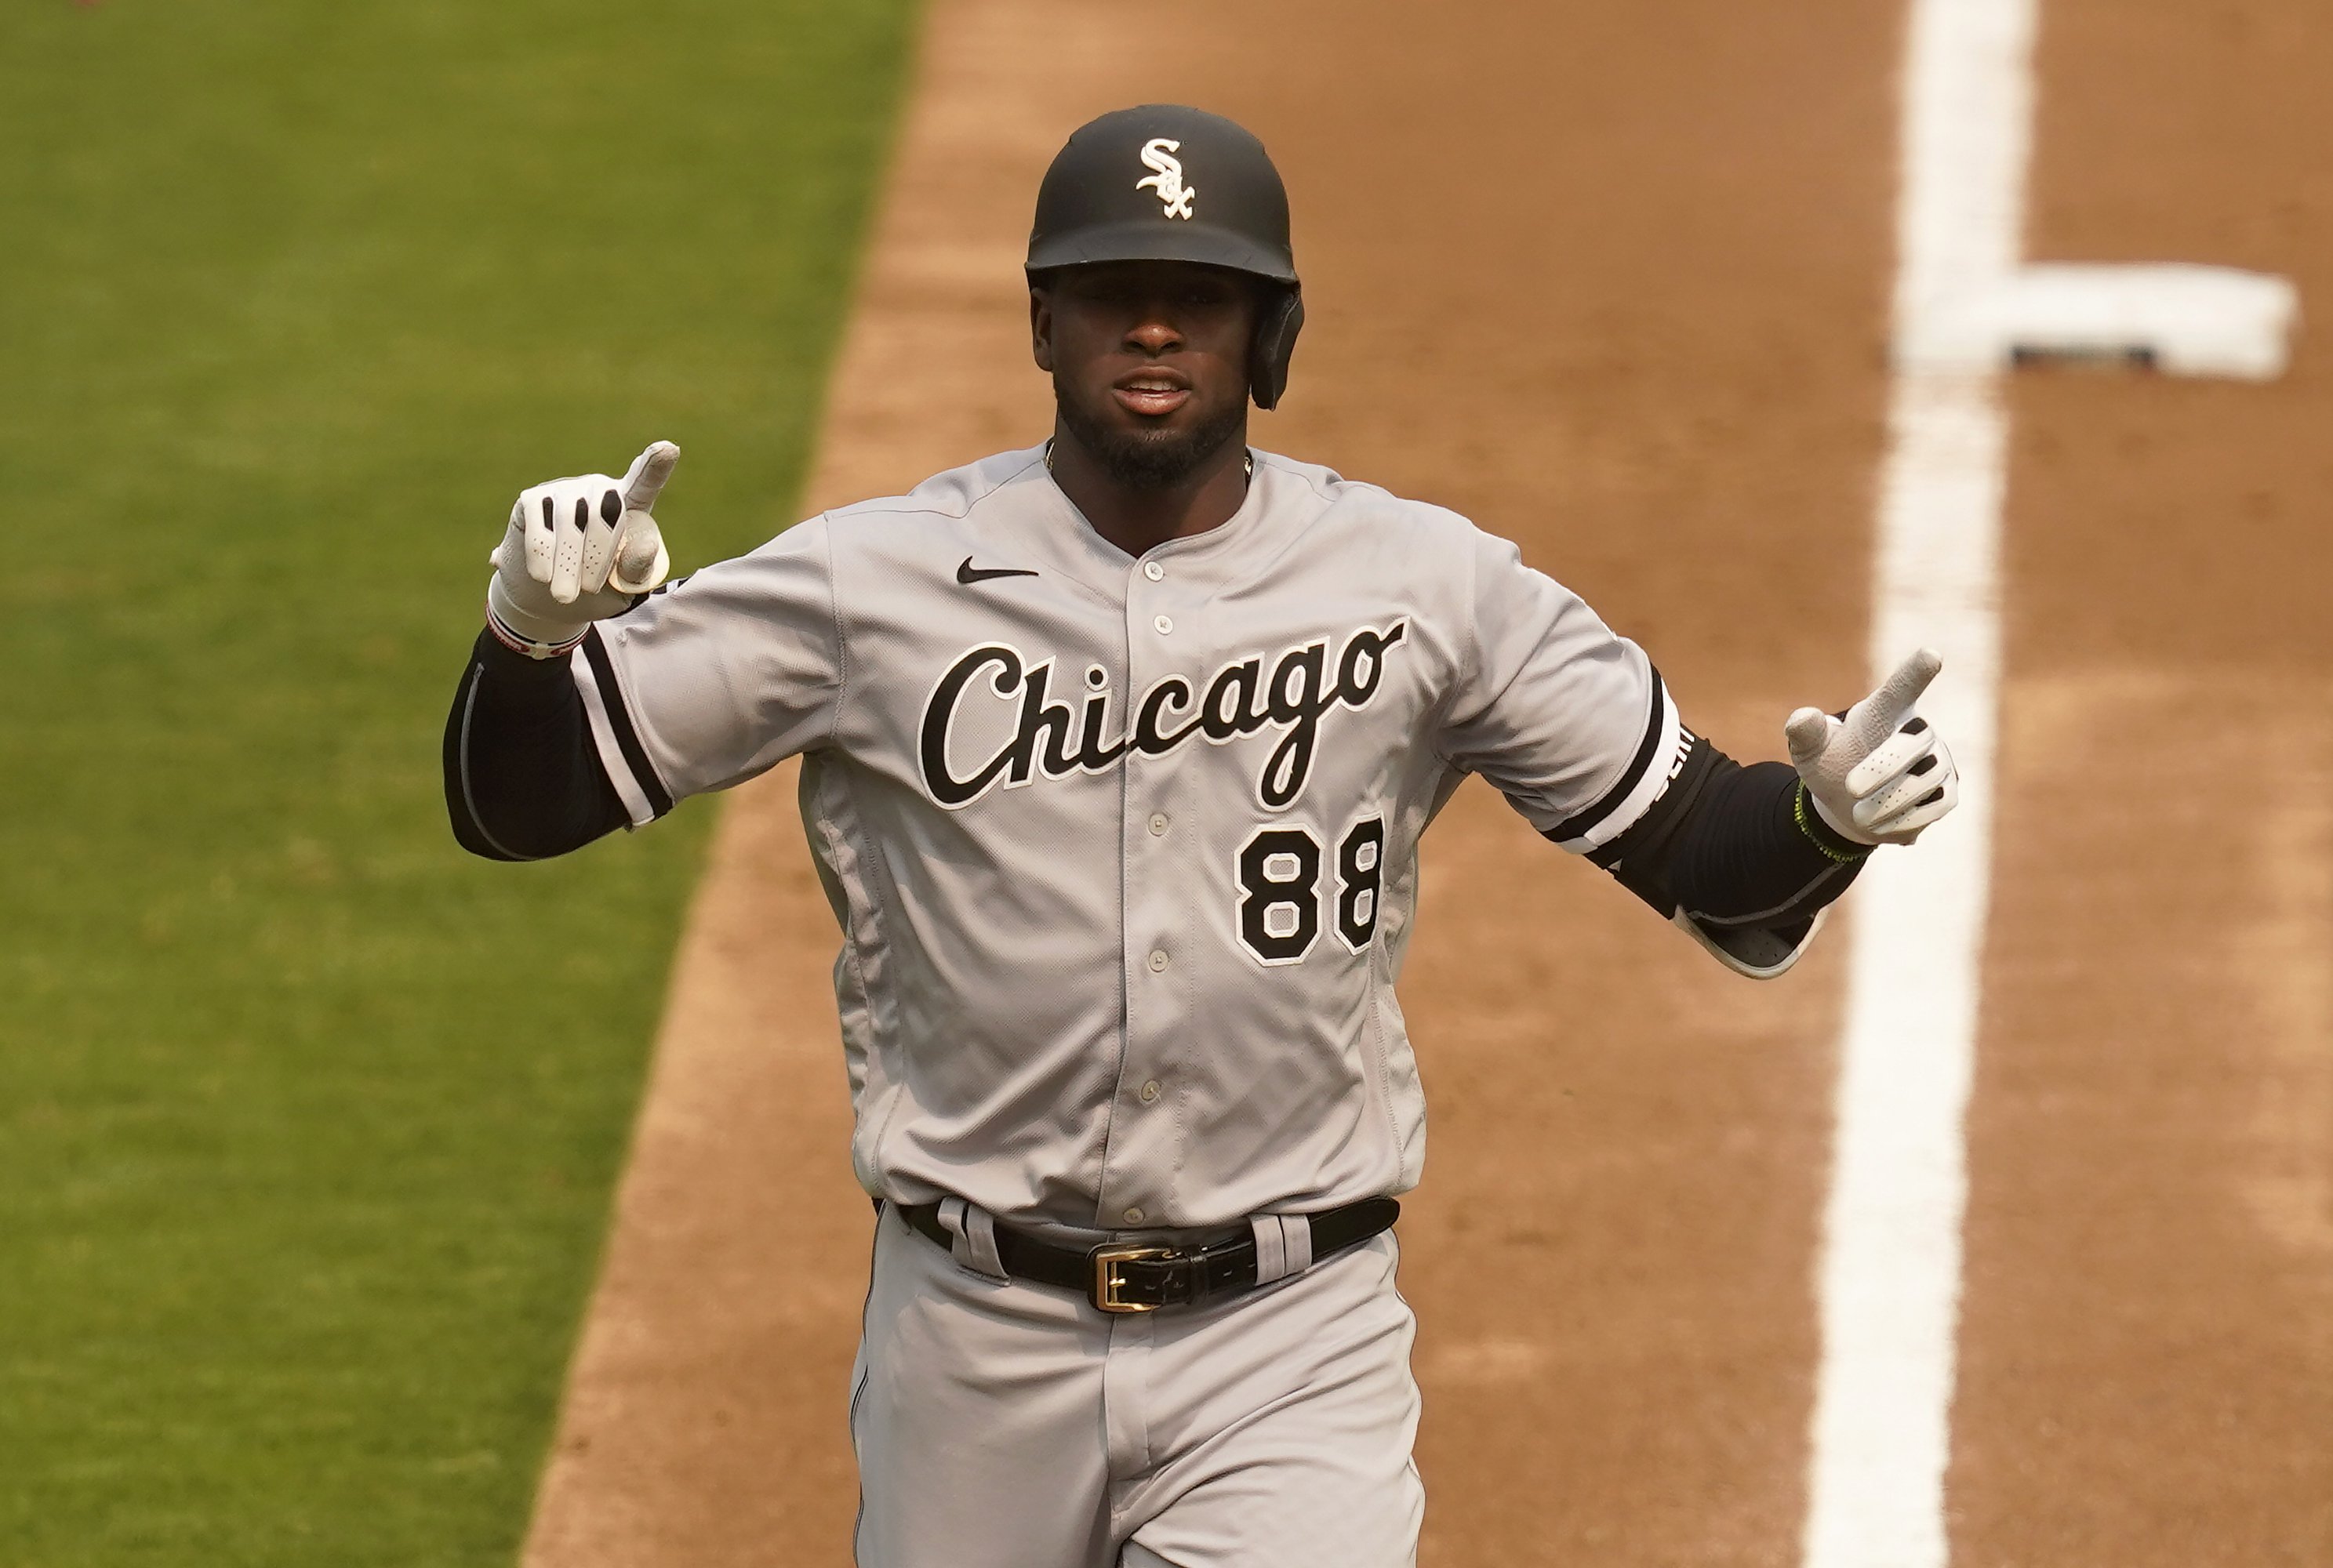 Baseball America names Kris Bryant as baseball's top prospect - NBC Sports